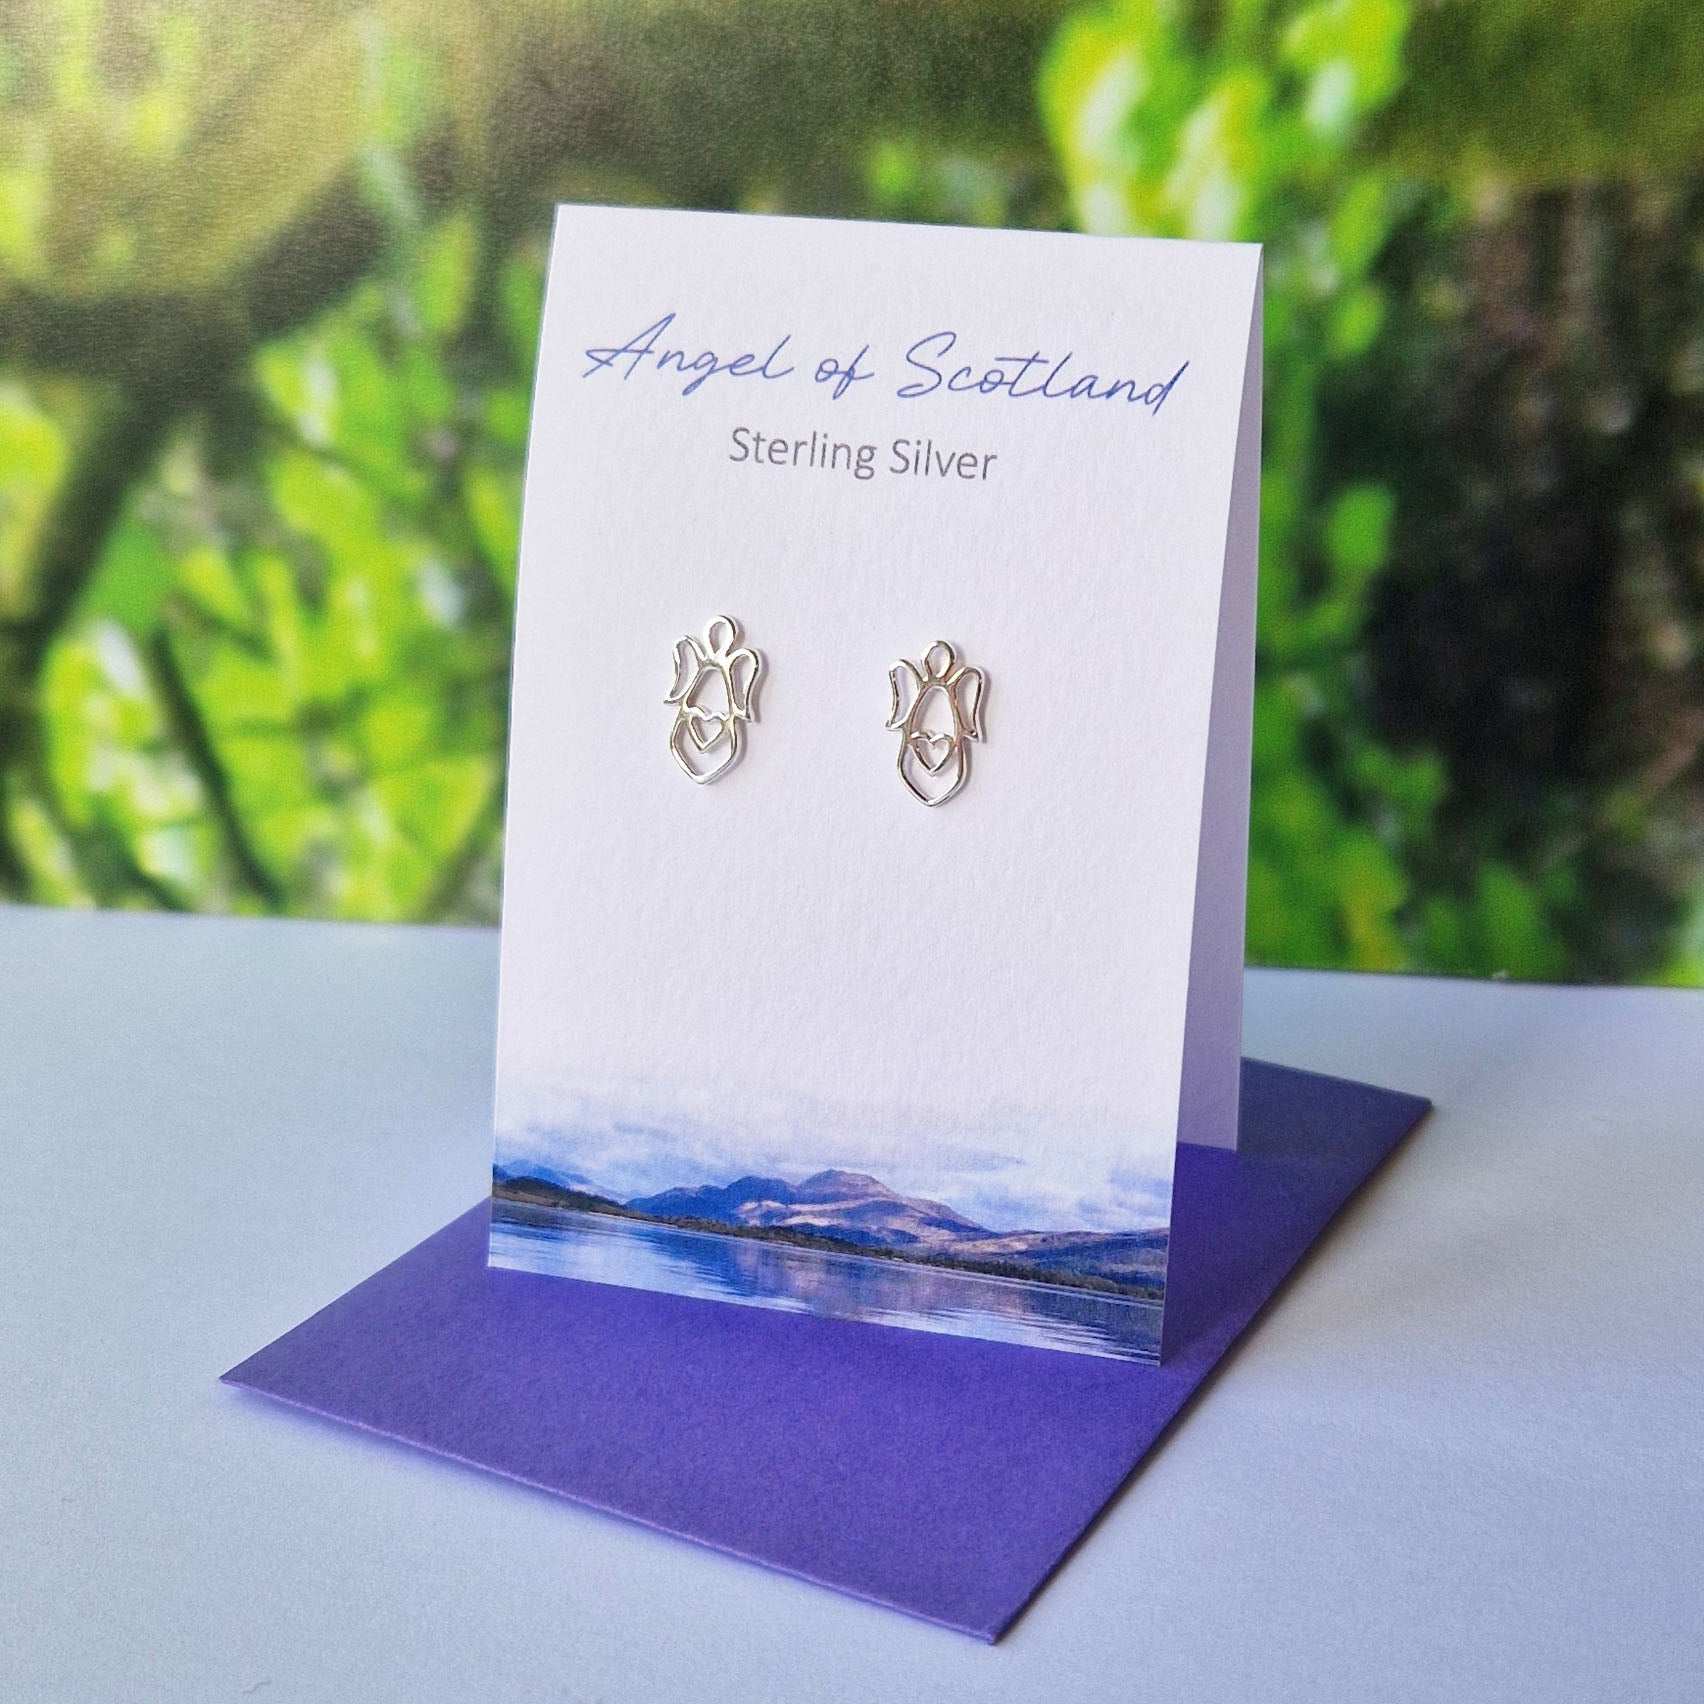 Angel of Scotland Stud Earrings